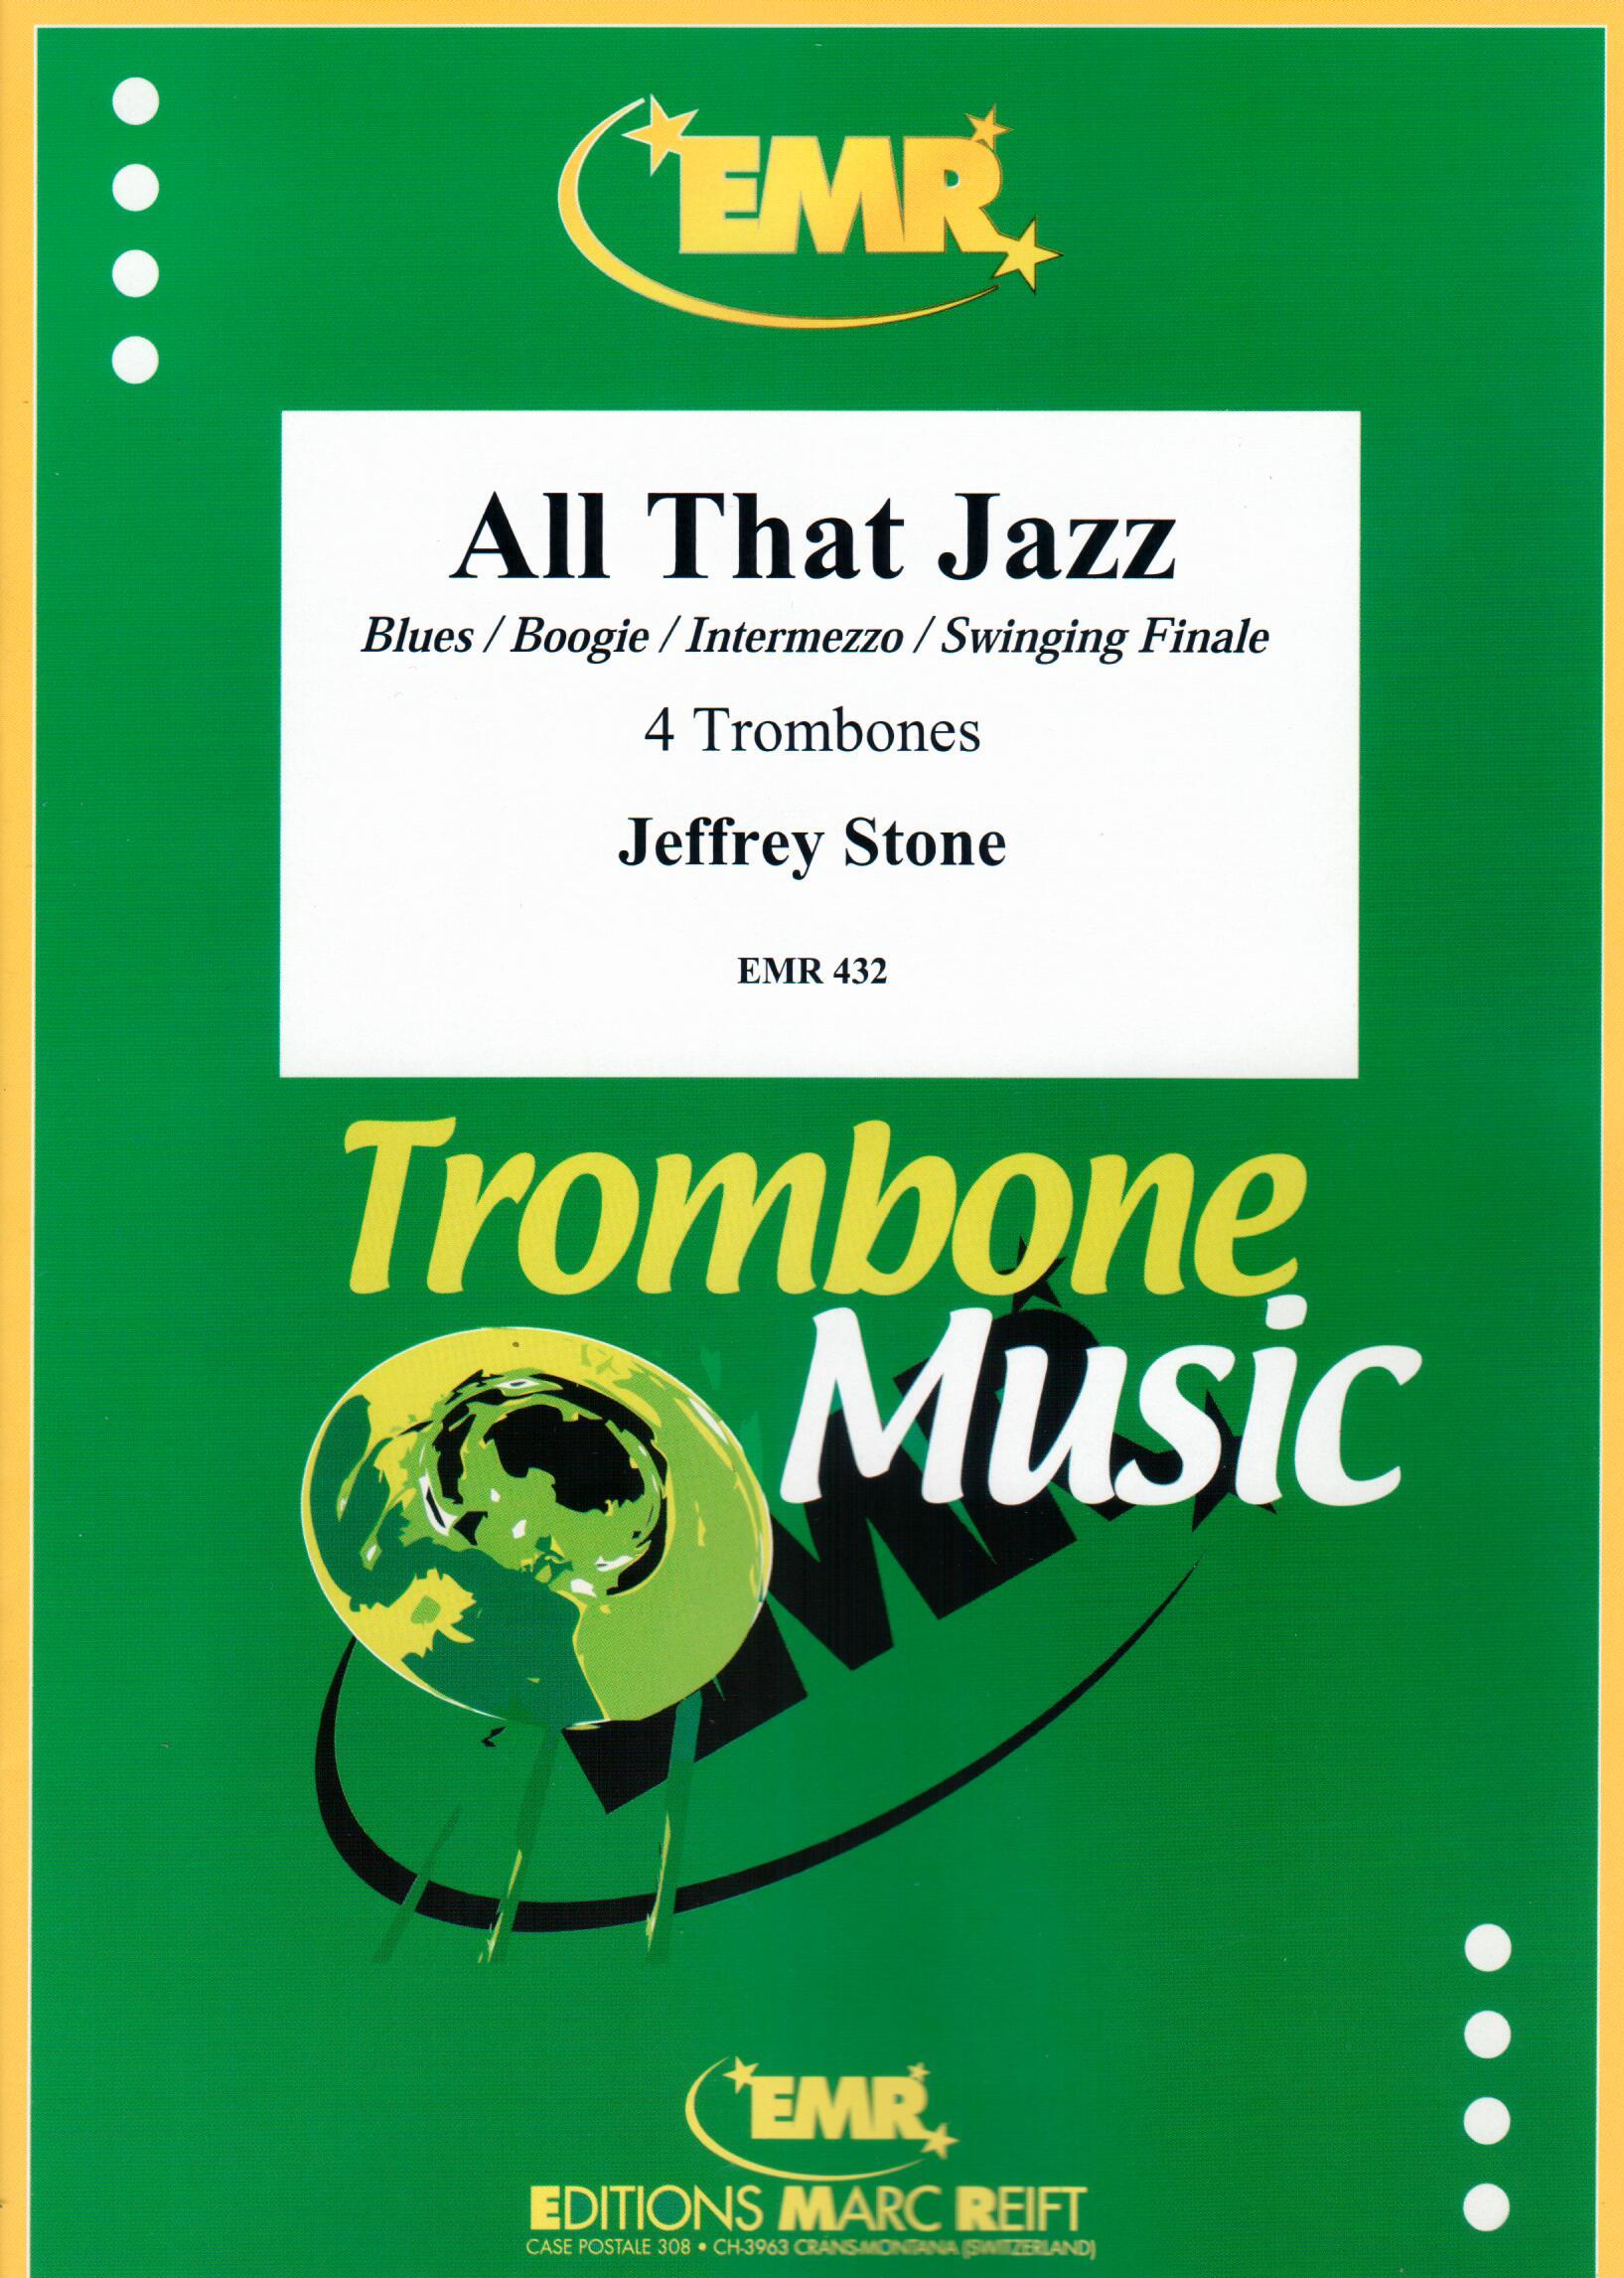 ALL THAT JAZZ, SOLOS - Trombone